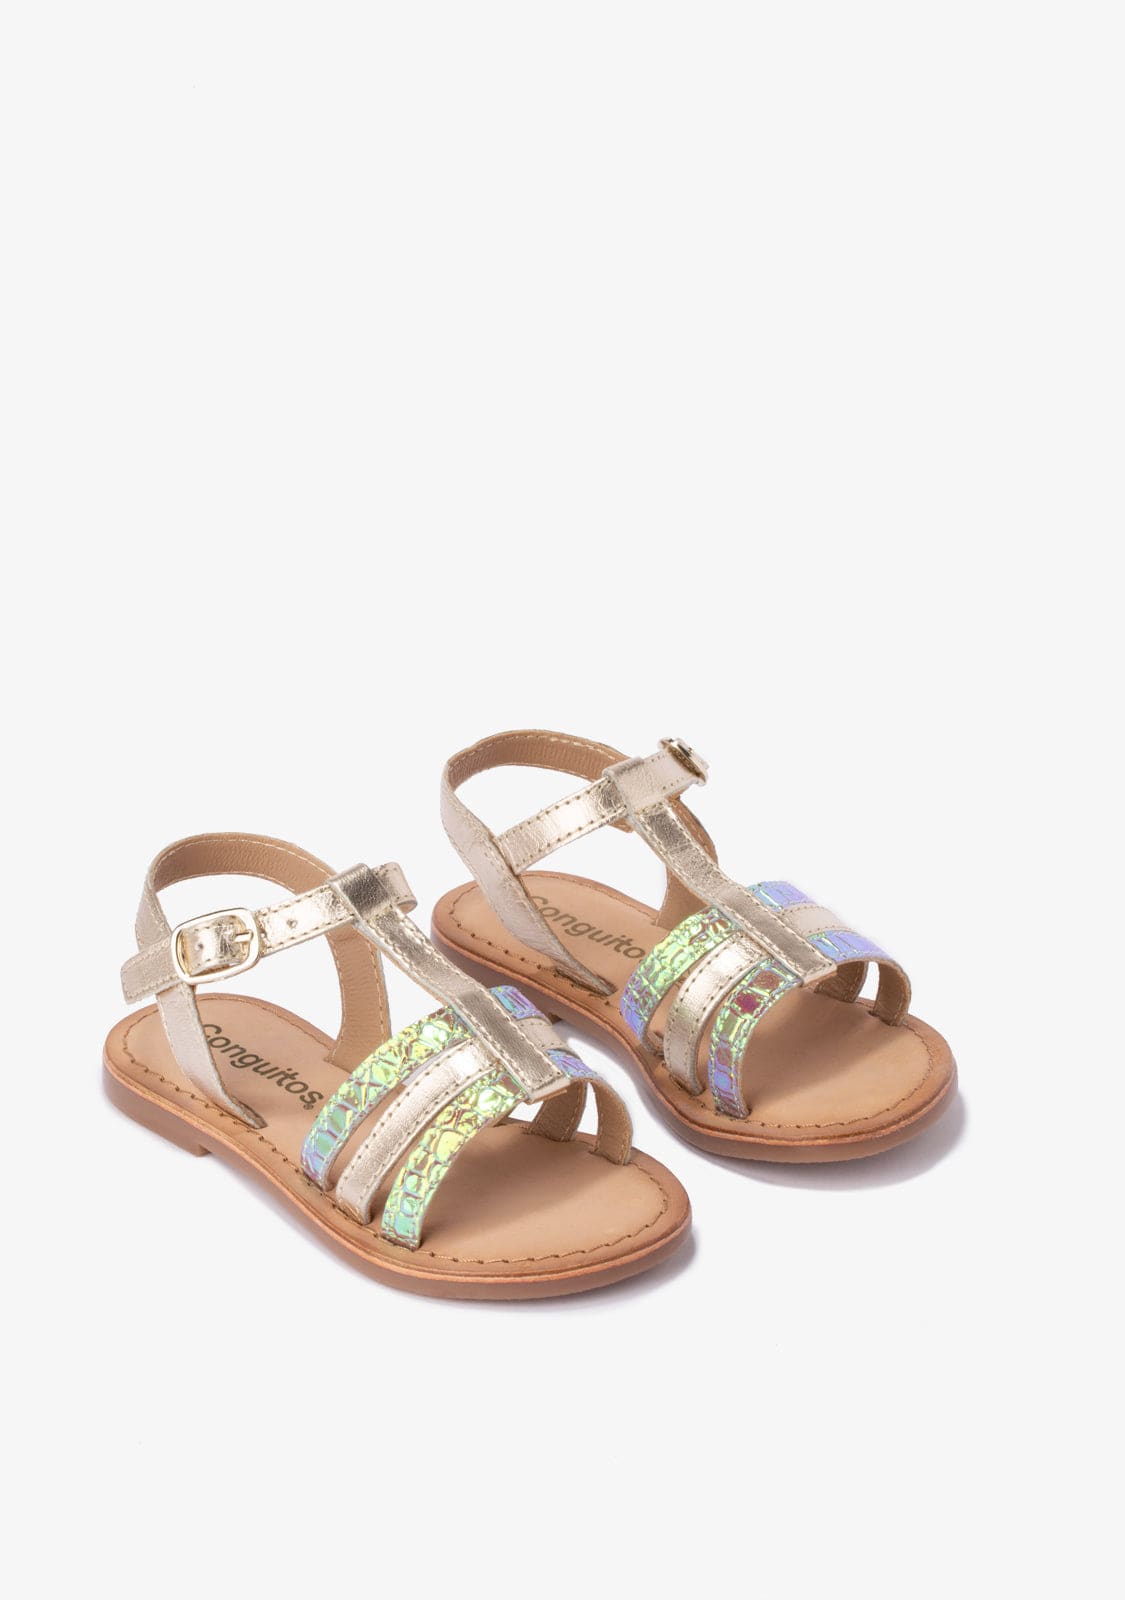 CONGUITOS Shoes Girl's Gold Texture Sandals Napa